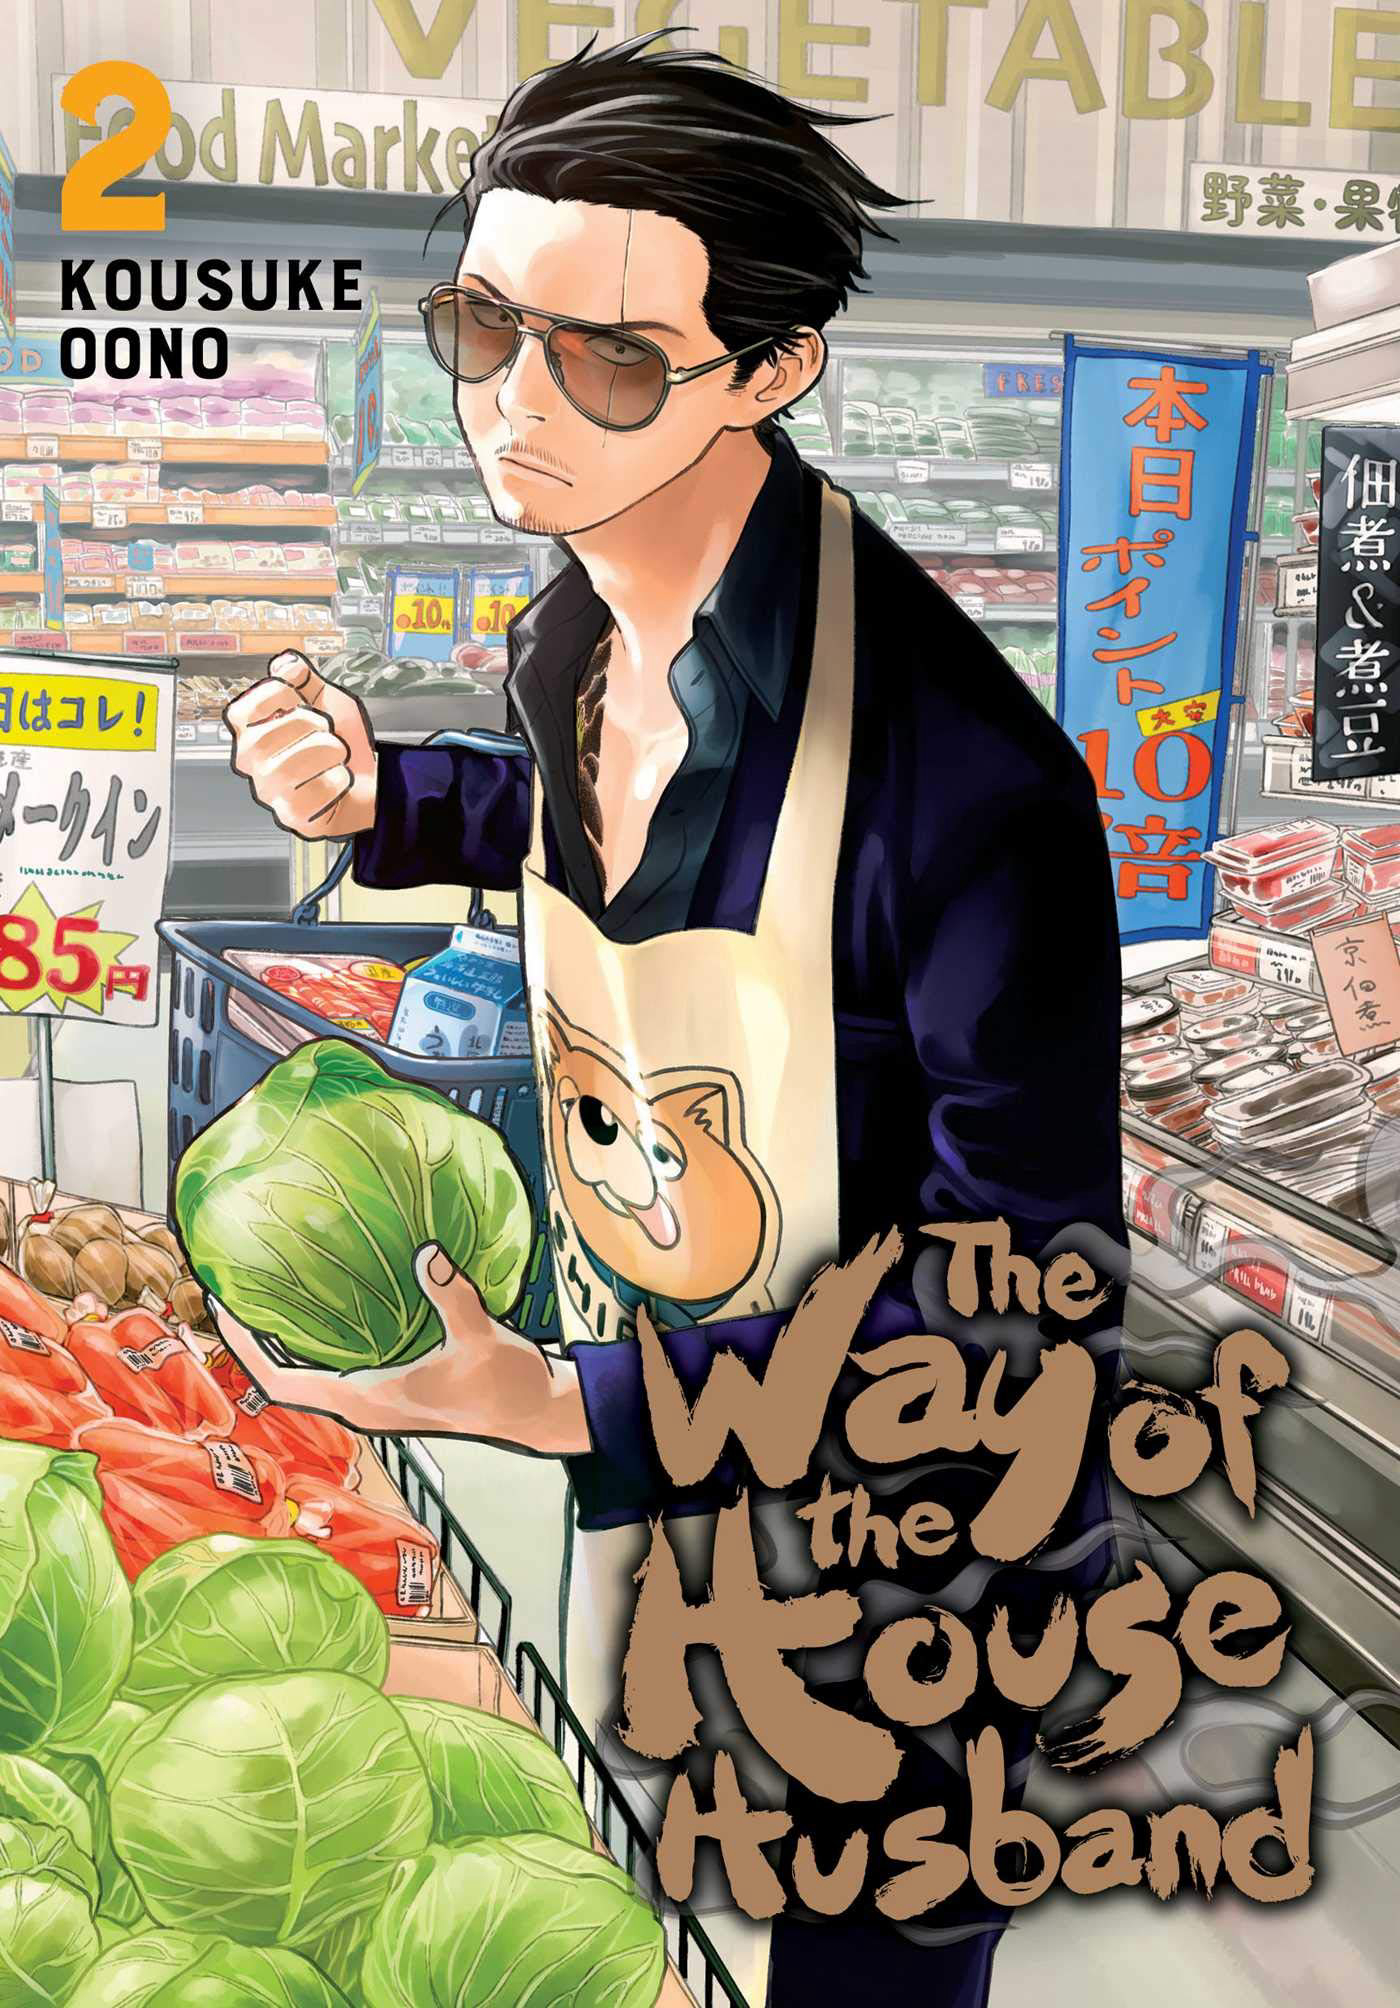 Poster Phim Ông chồng yakuza nội trợ (The Way of the Househusband)